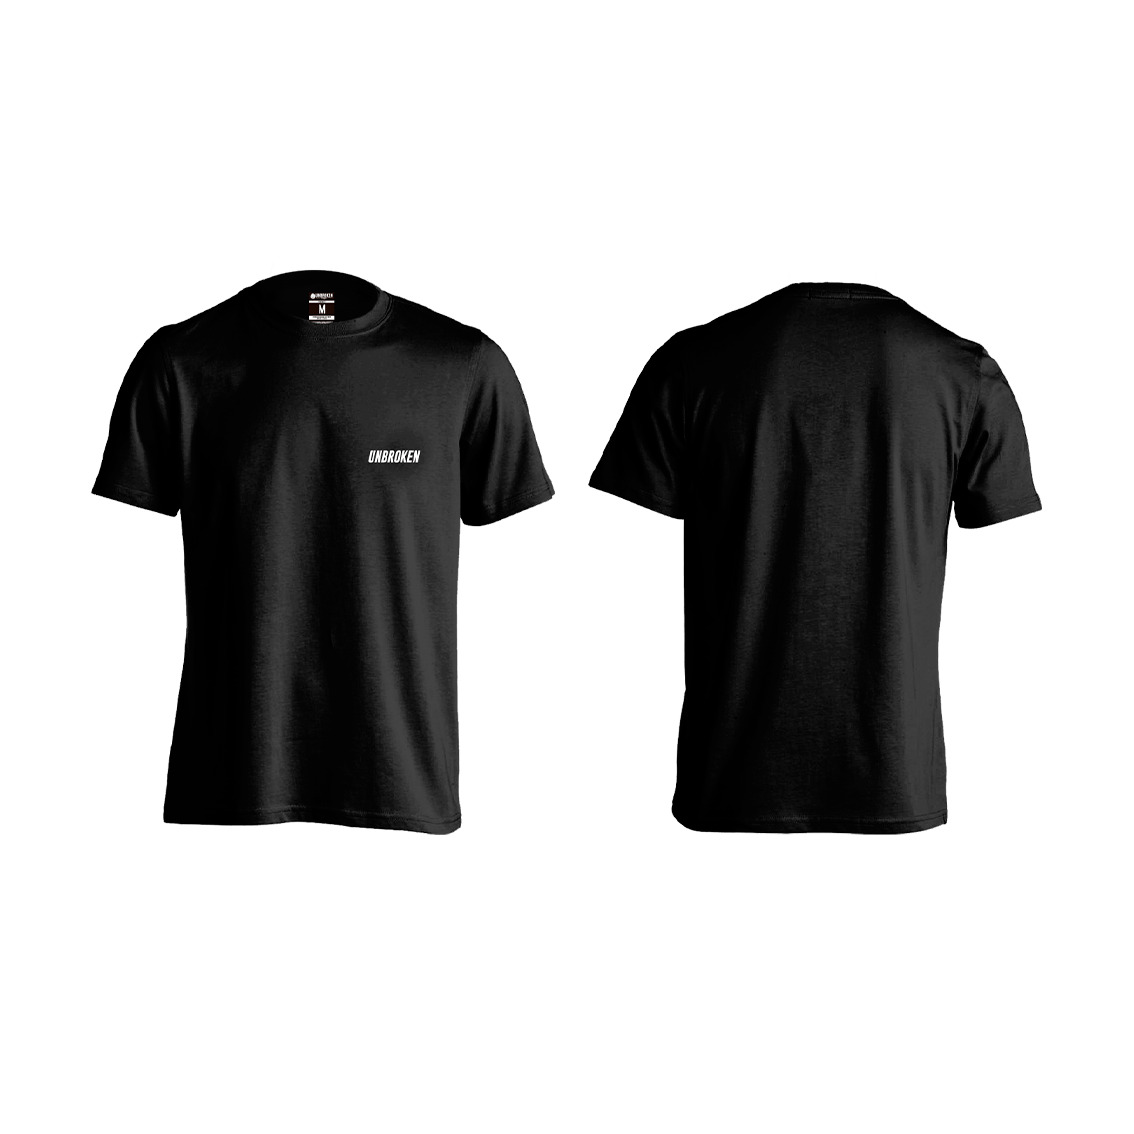 Camiseta Unbroken basic Black - Unbroken Sports Wear 